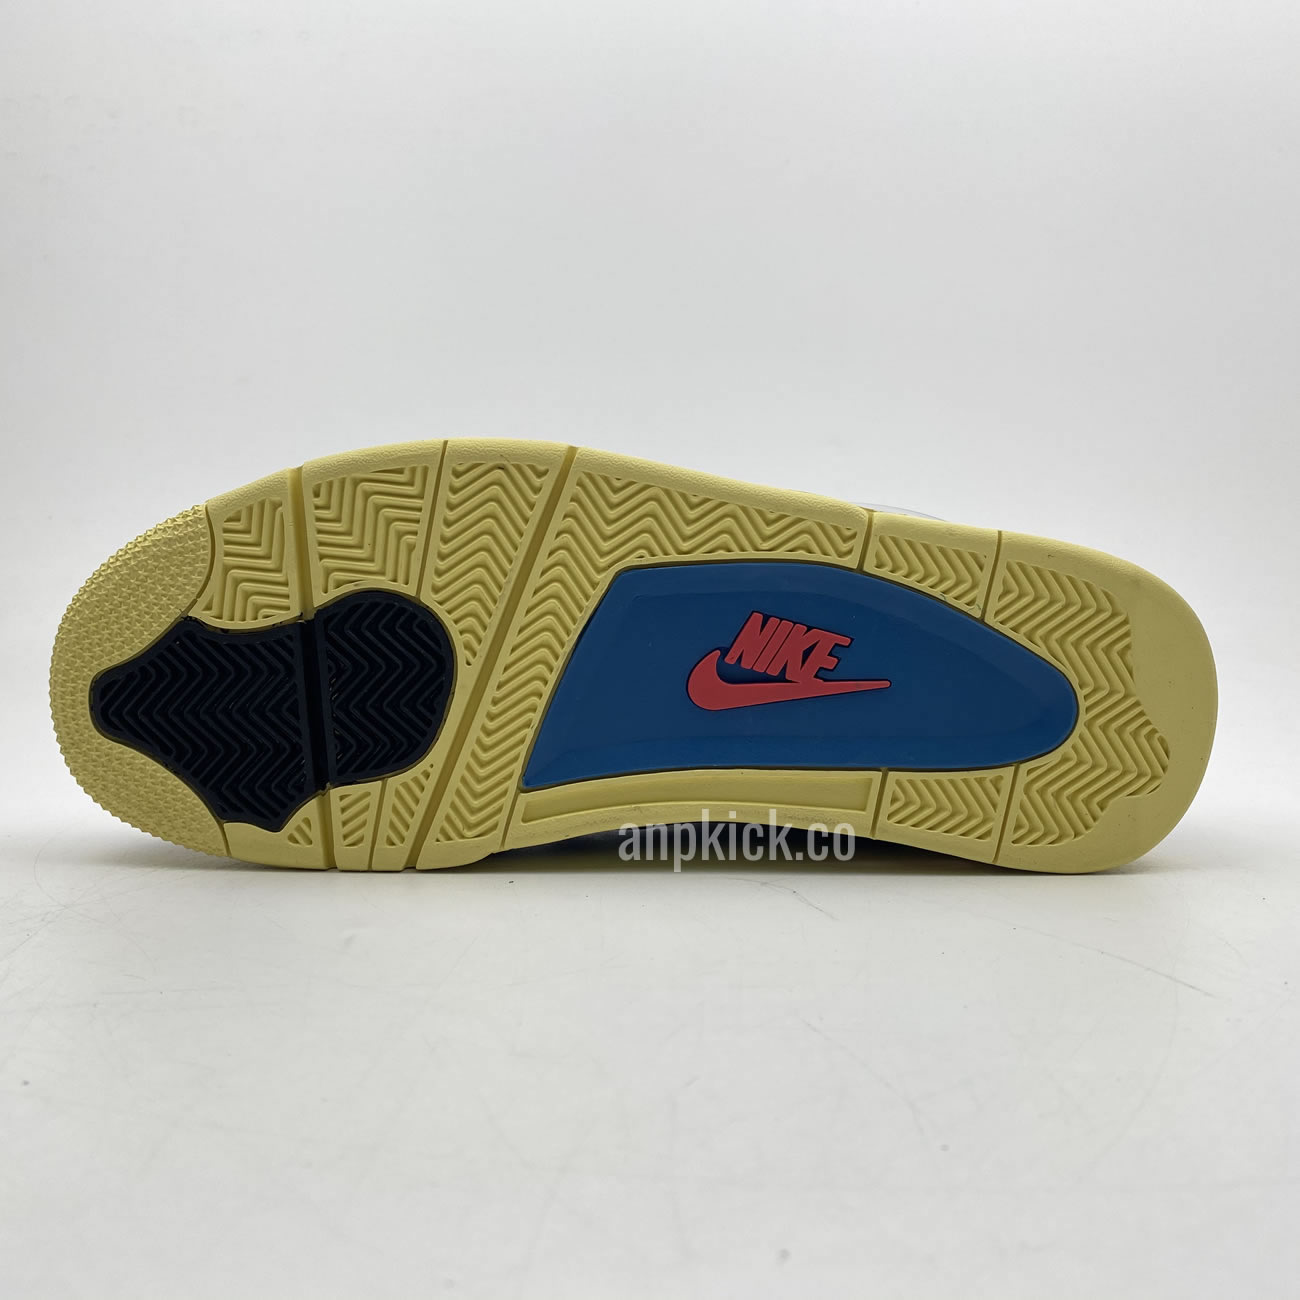 Nike Union Air Jordan 4 Retro Off Noir Dc9533 001 Release Date (7) - newkick.org